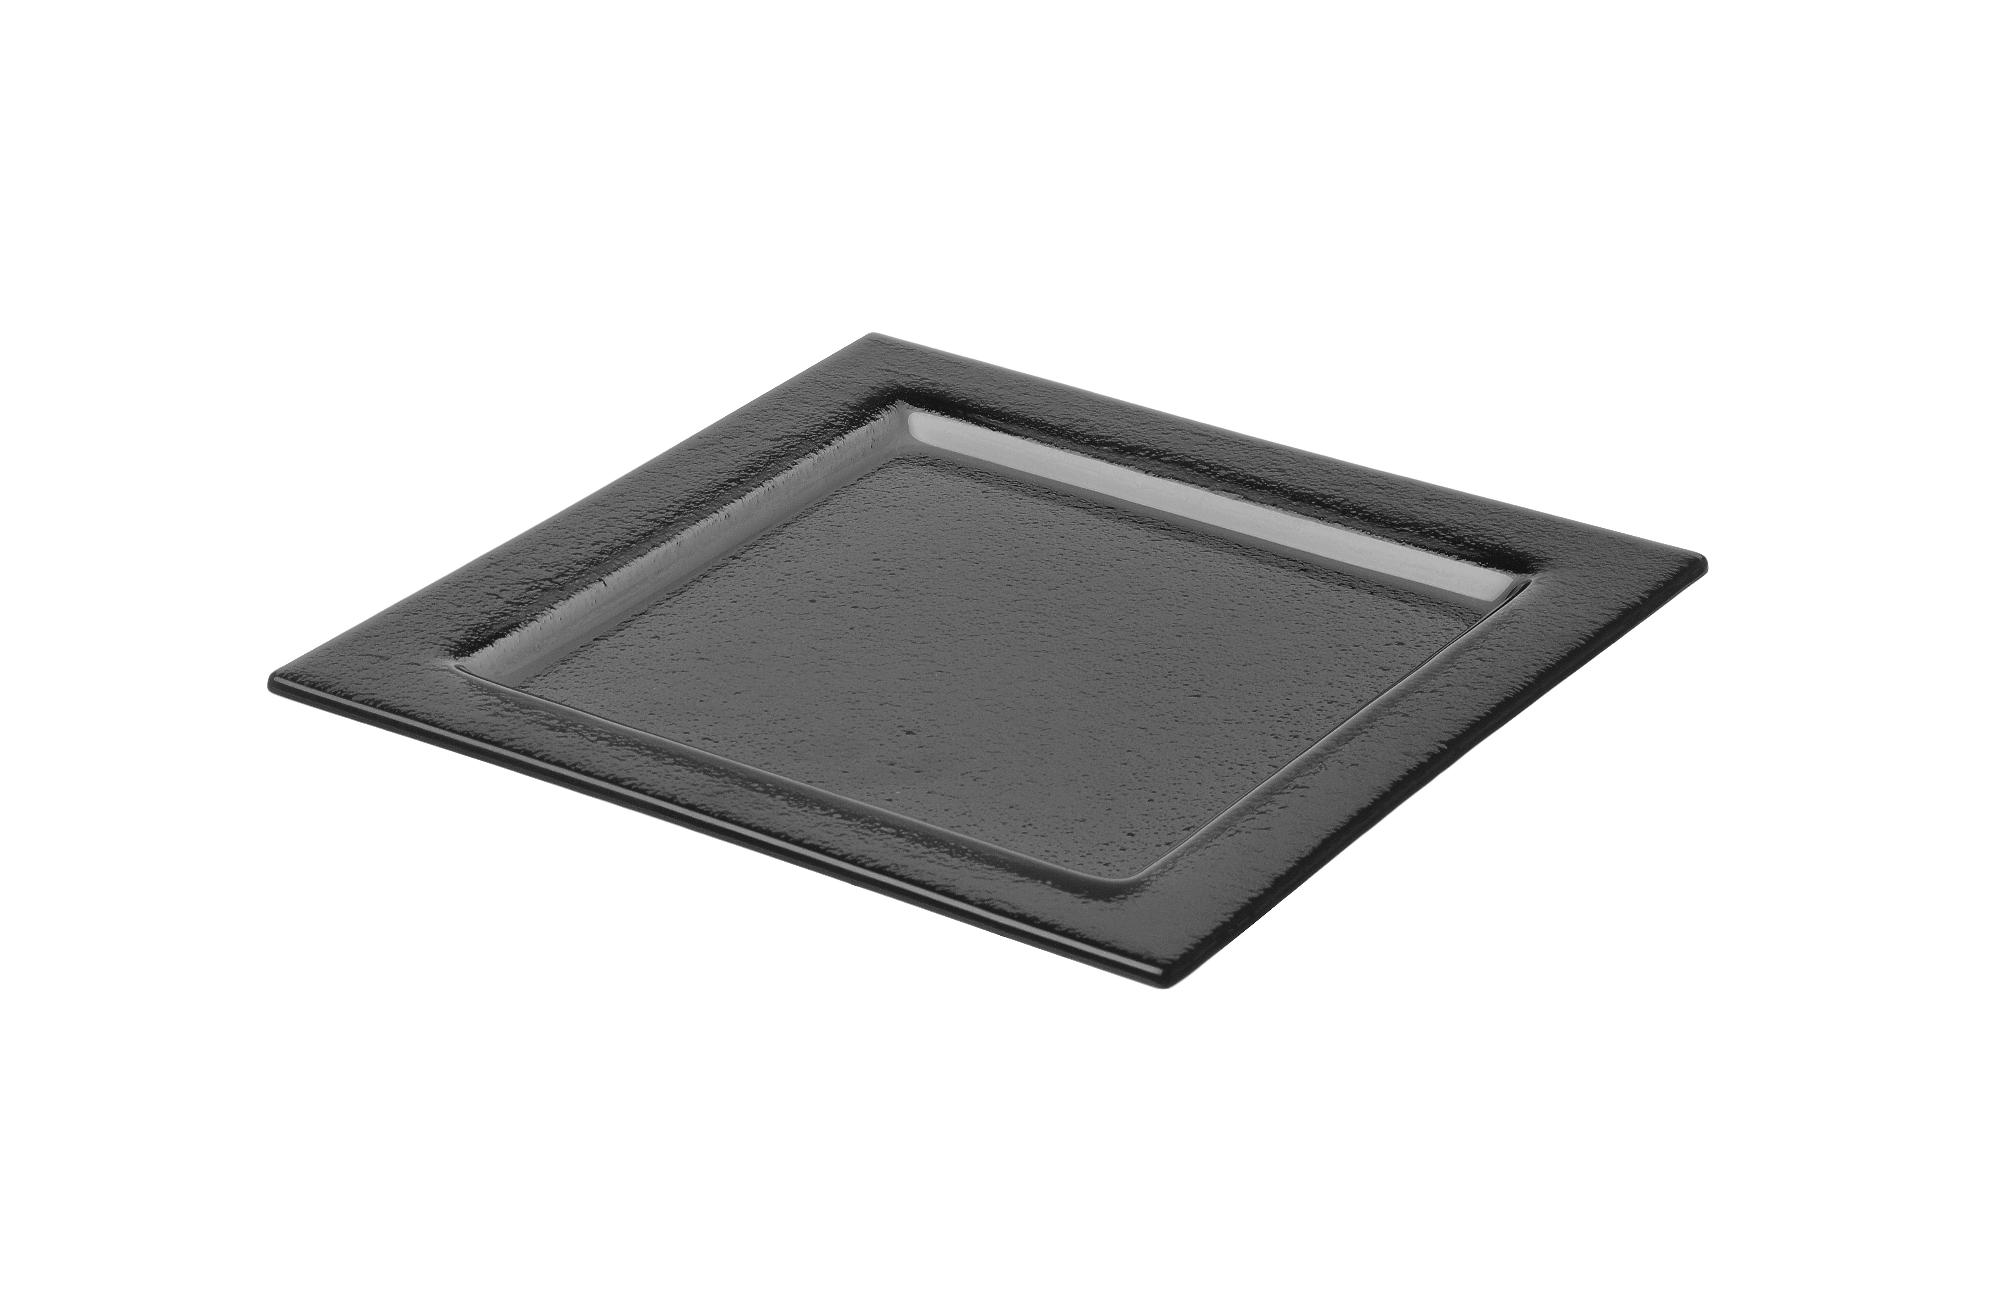 Vetro black glass square tray, 300x300mm